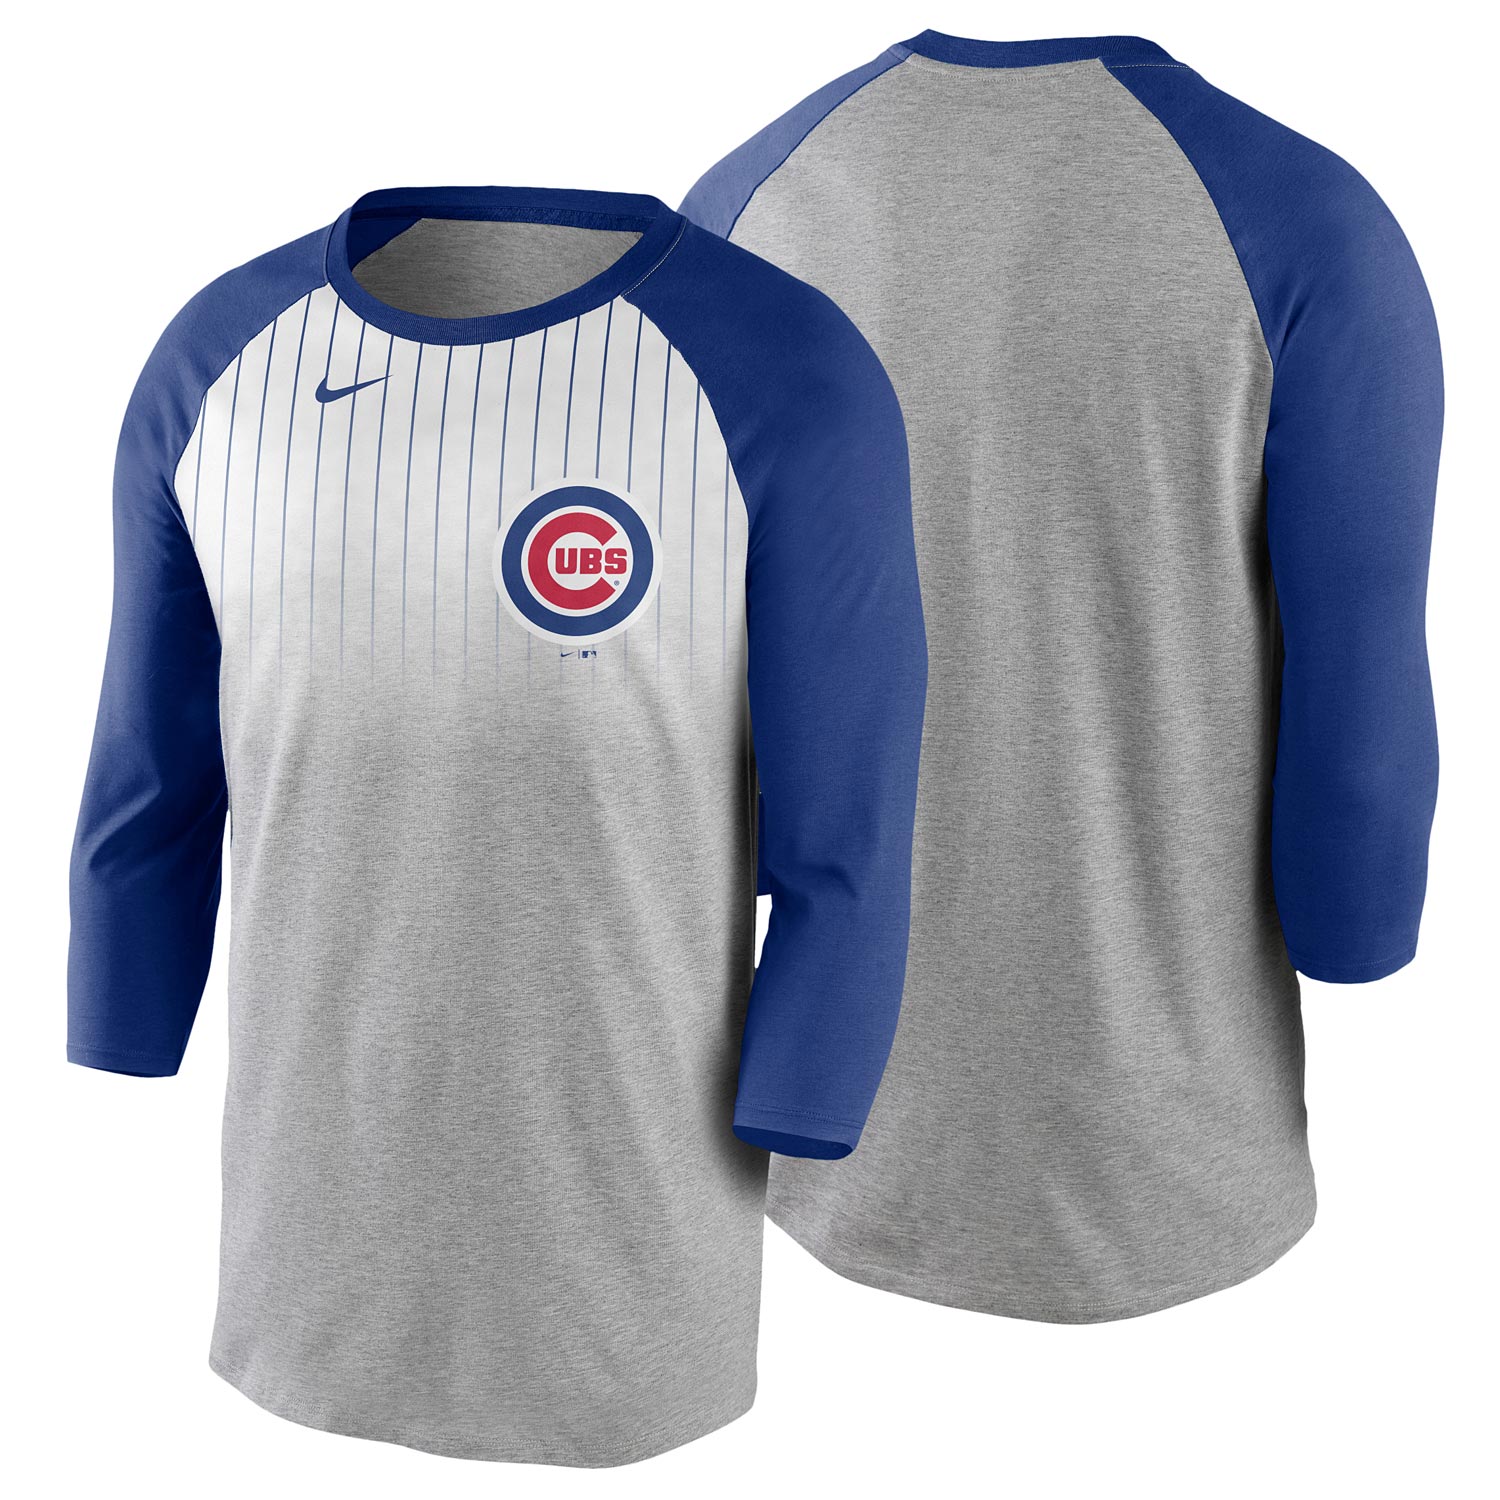 Authentic Chicago Cubs Nike Dri-FIT Performance Under Jersey Shirt size  Men's XL